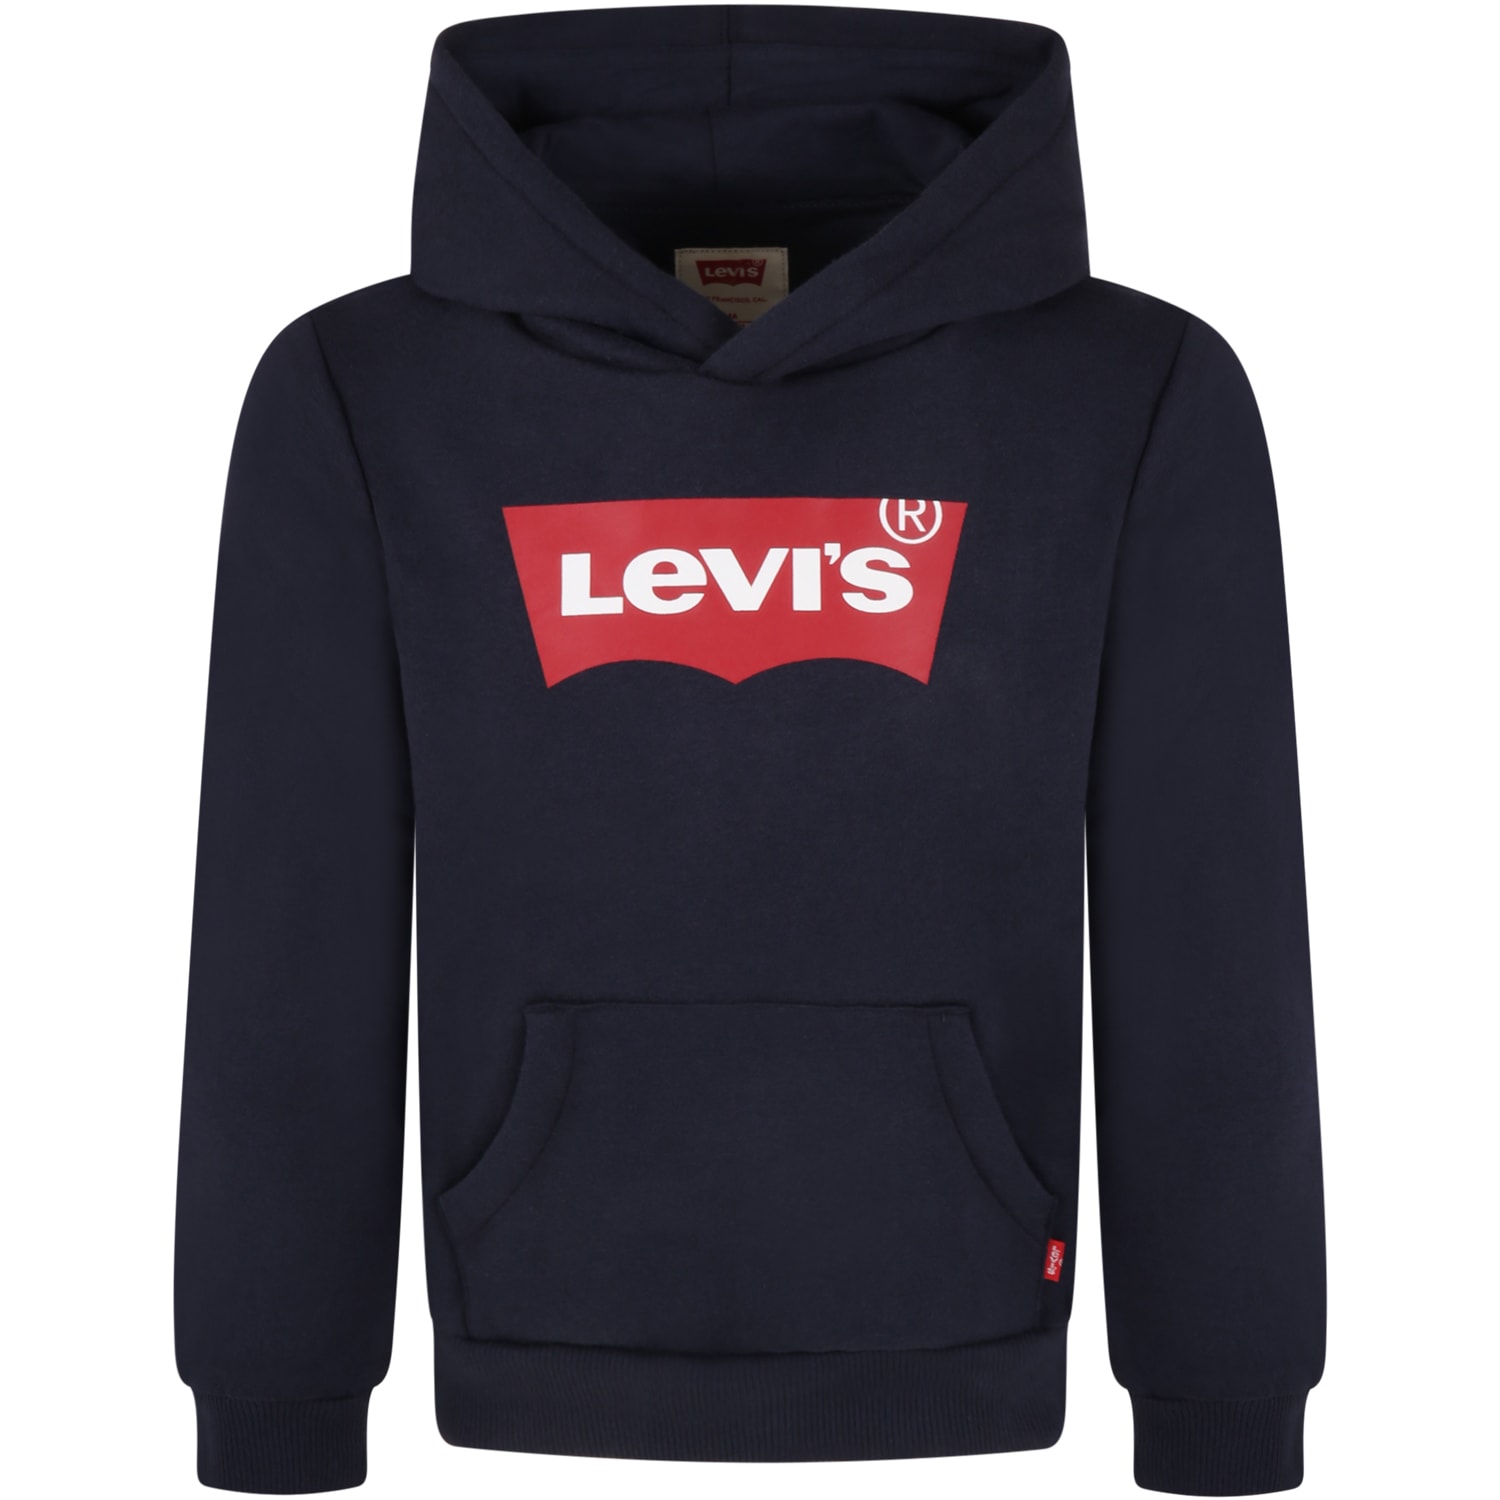 Levi's Blue Sweatshirt For Kids With White Logo